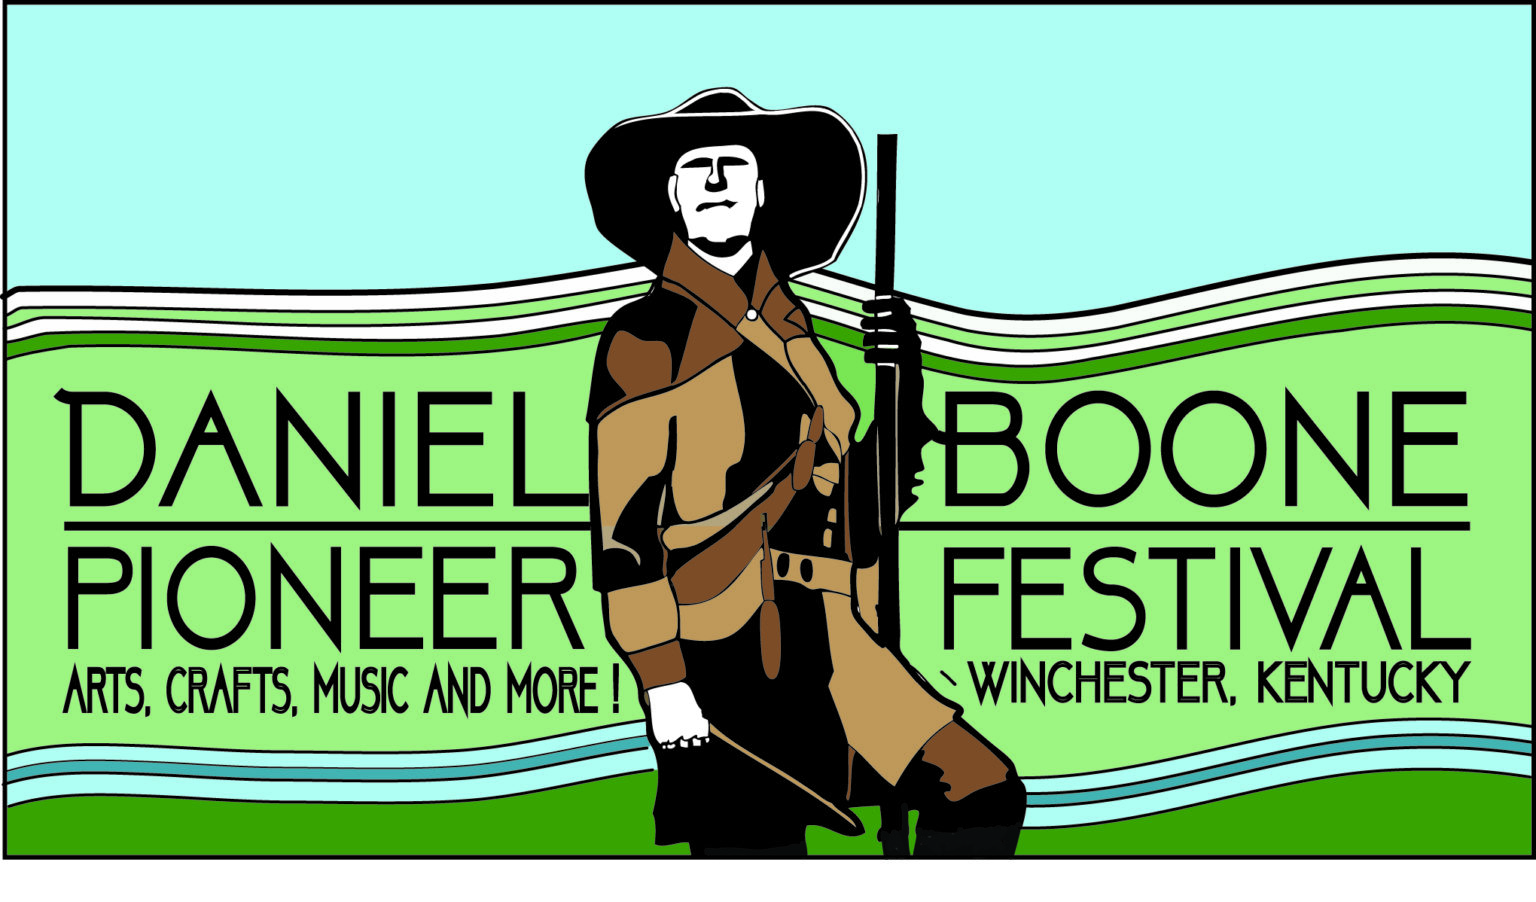 Daniel Boone Pioneer Festival Arts, Crafts, Music & More! Visit